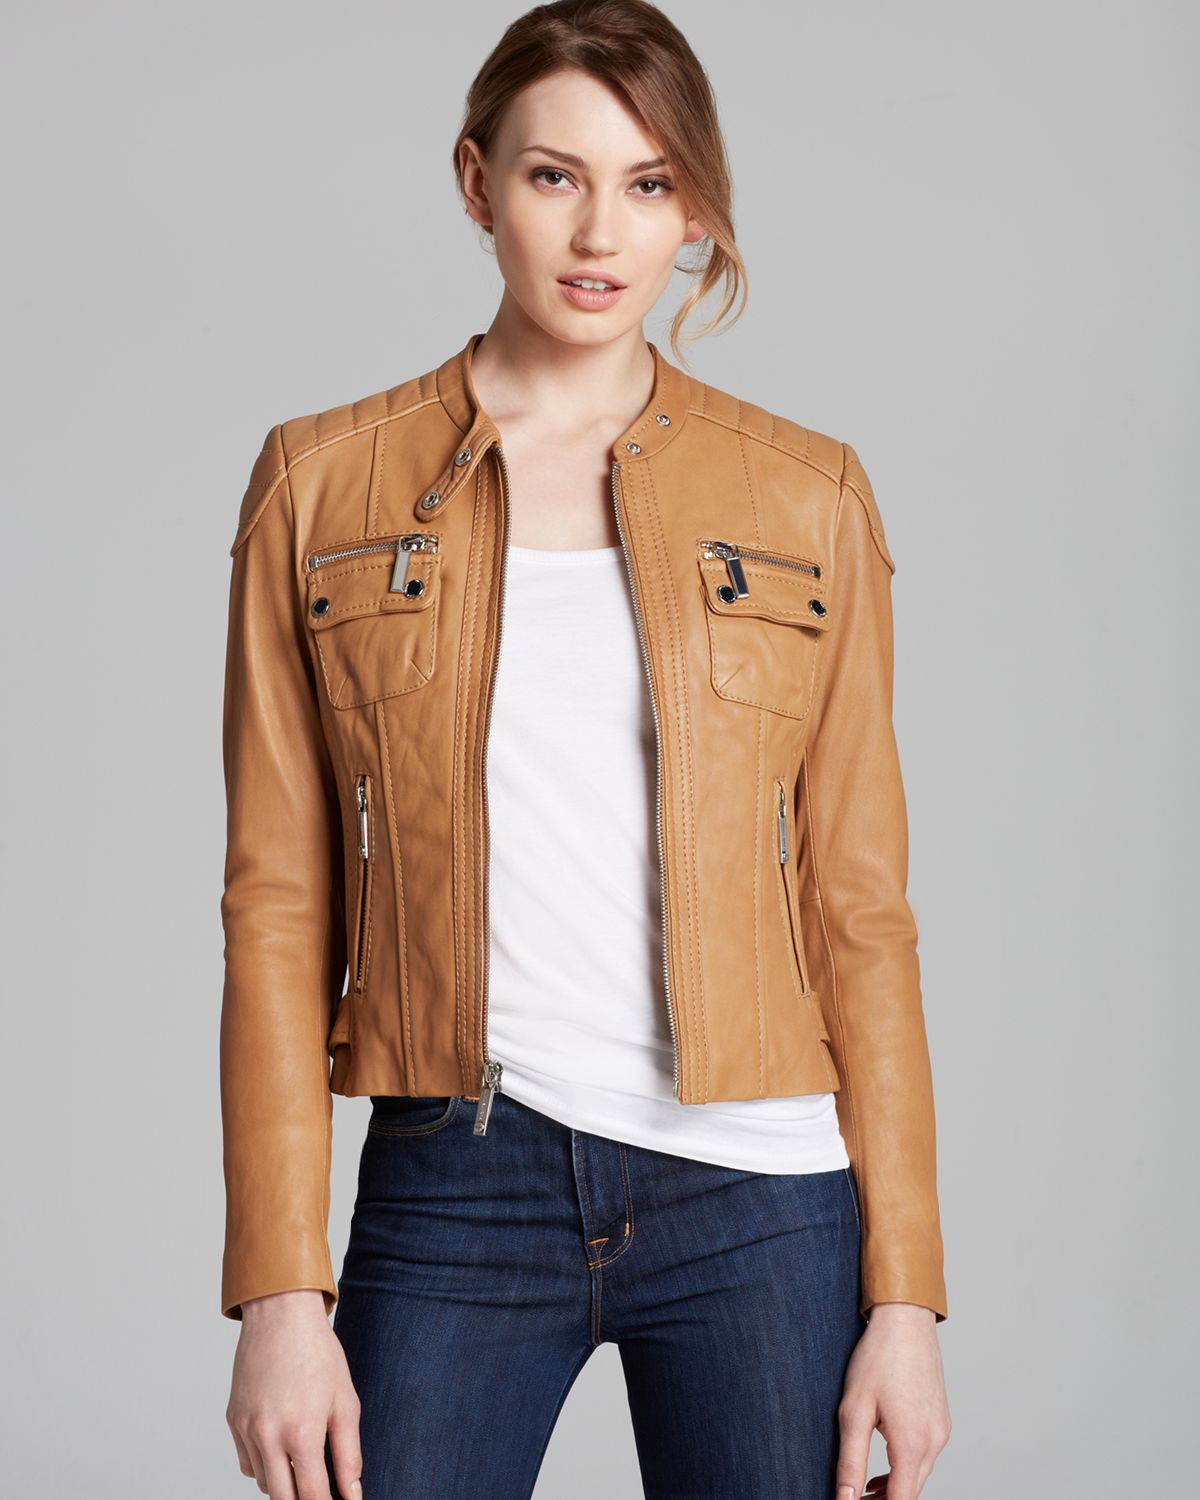 michael kors brown leather jacket womens